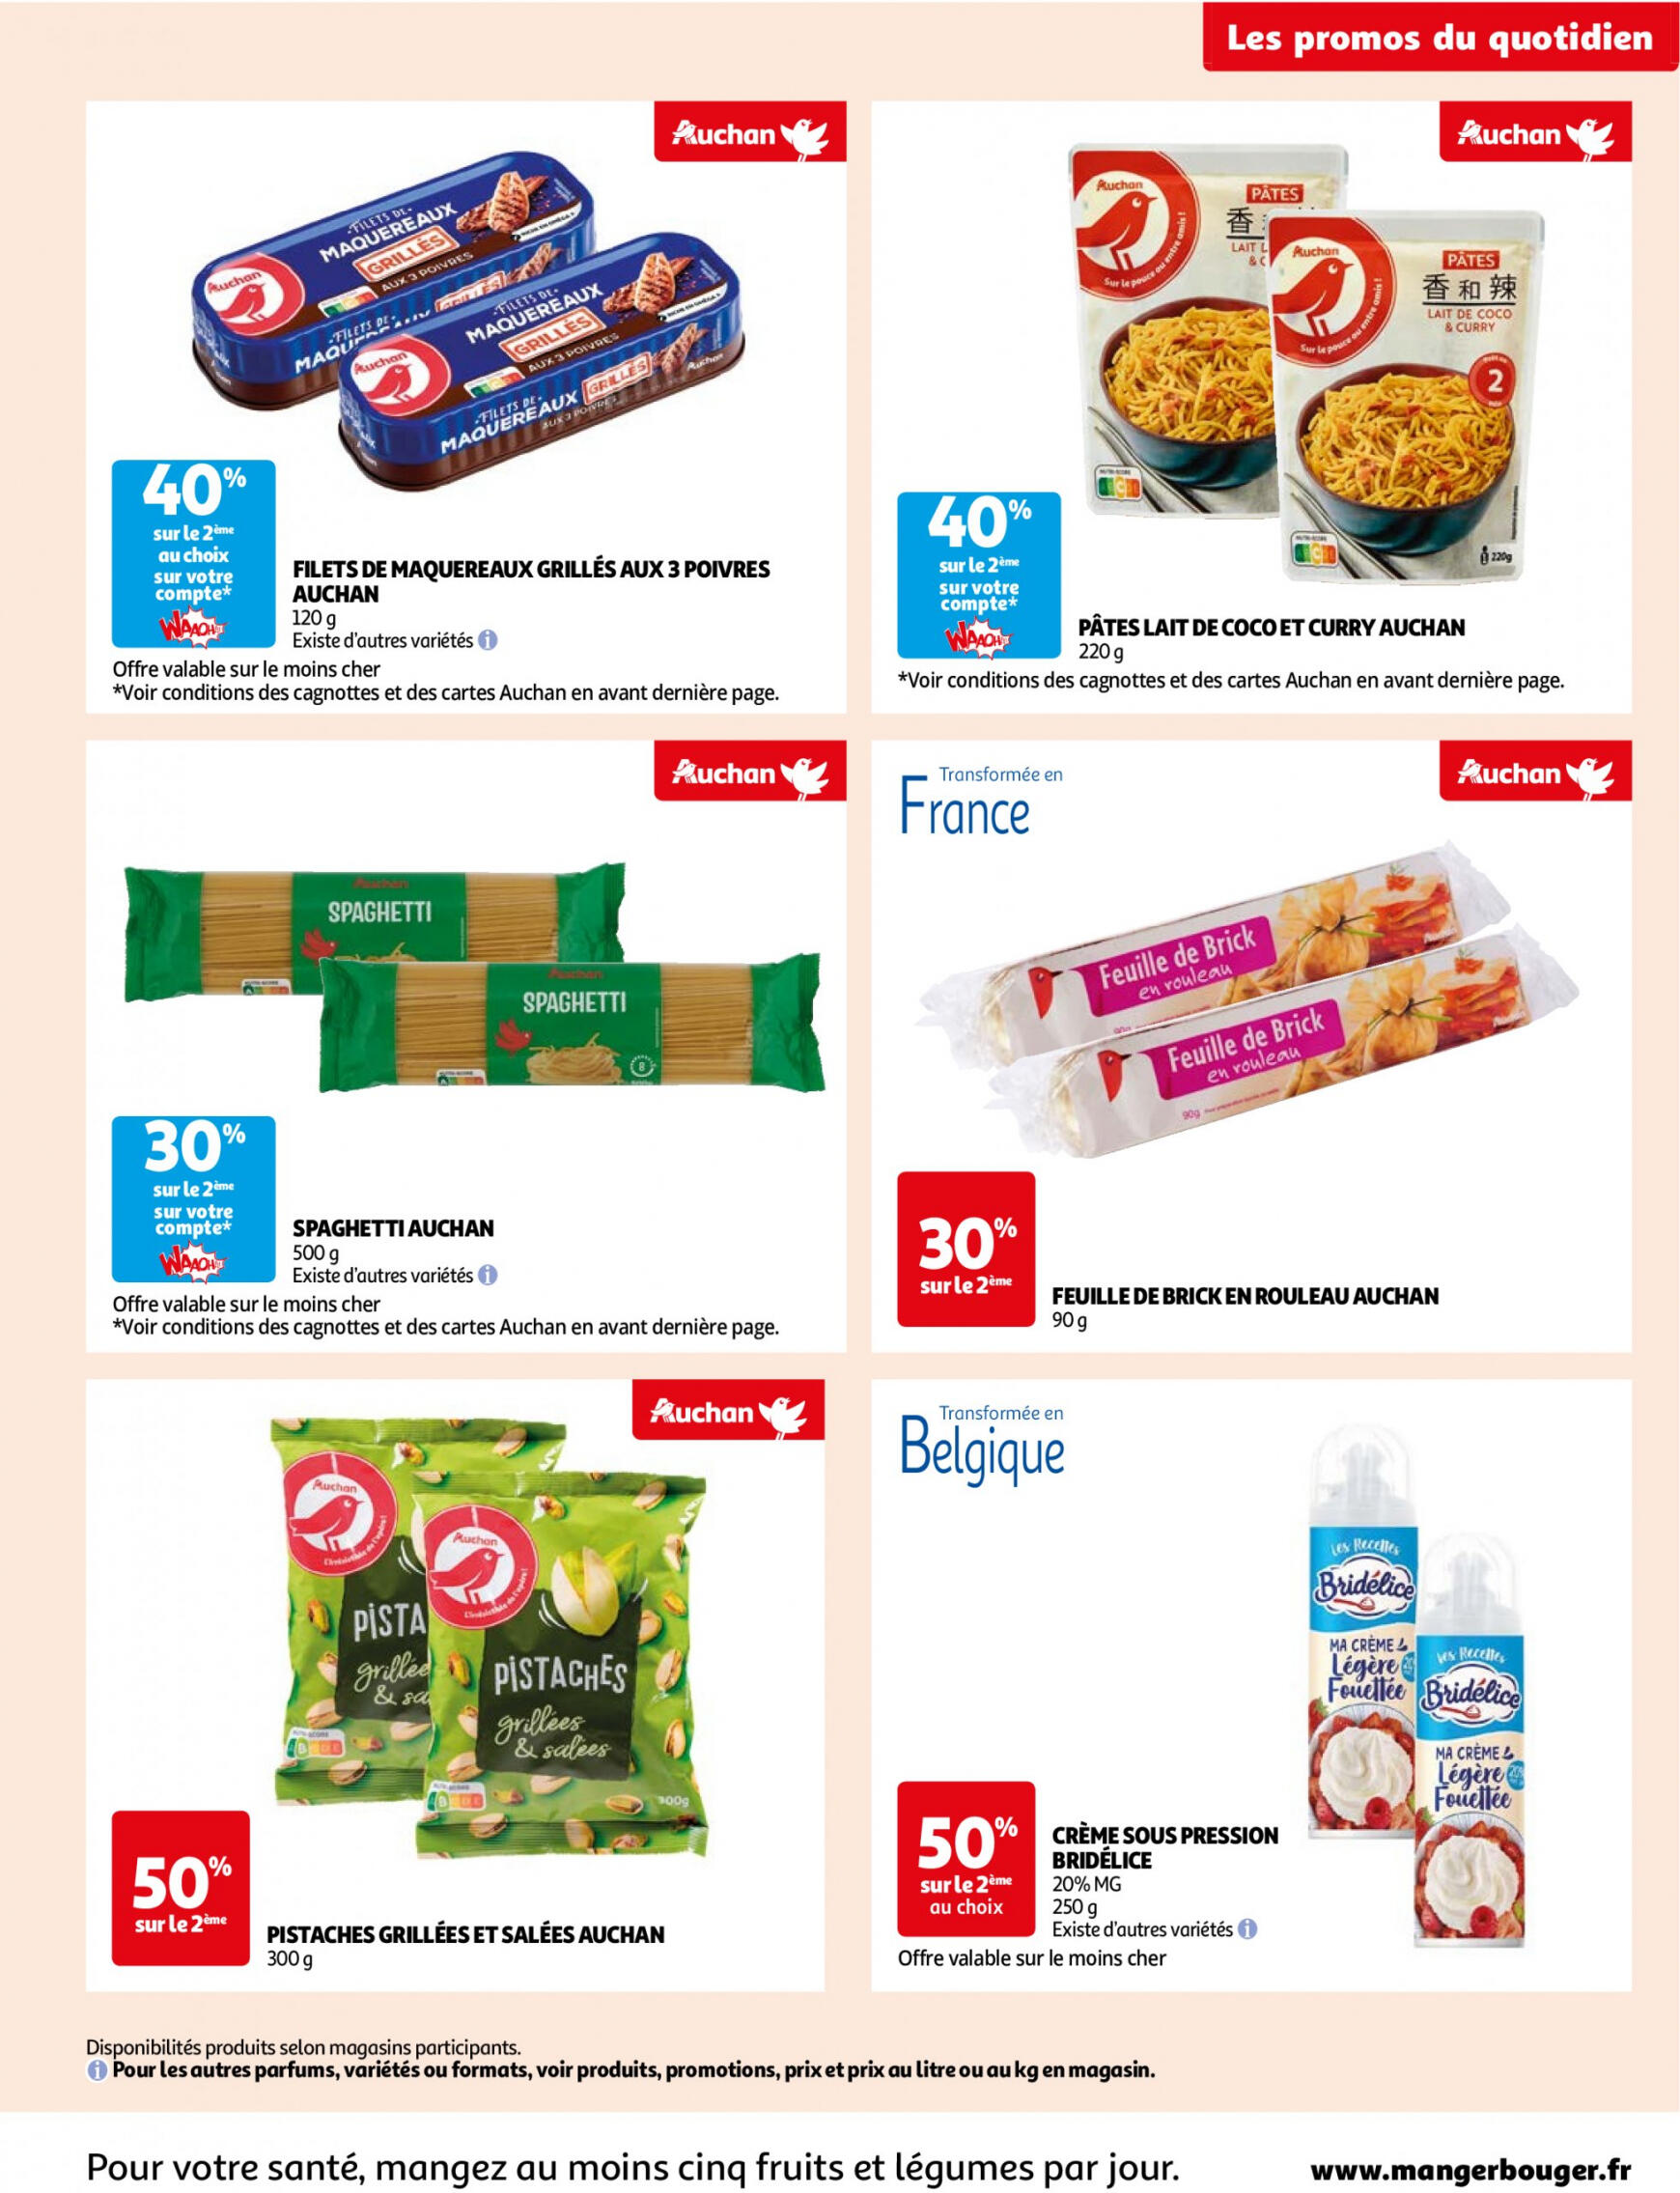 auchan - Auchan - Supermarché folder huidig 14.05. - 02.06. - page: 5